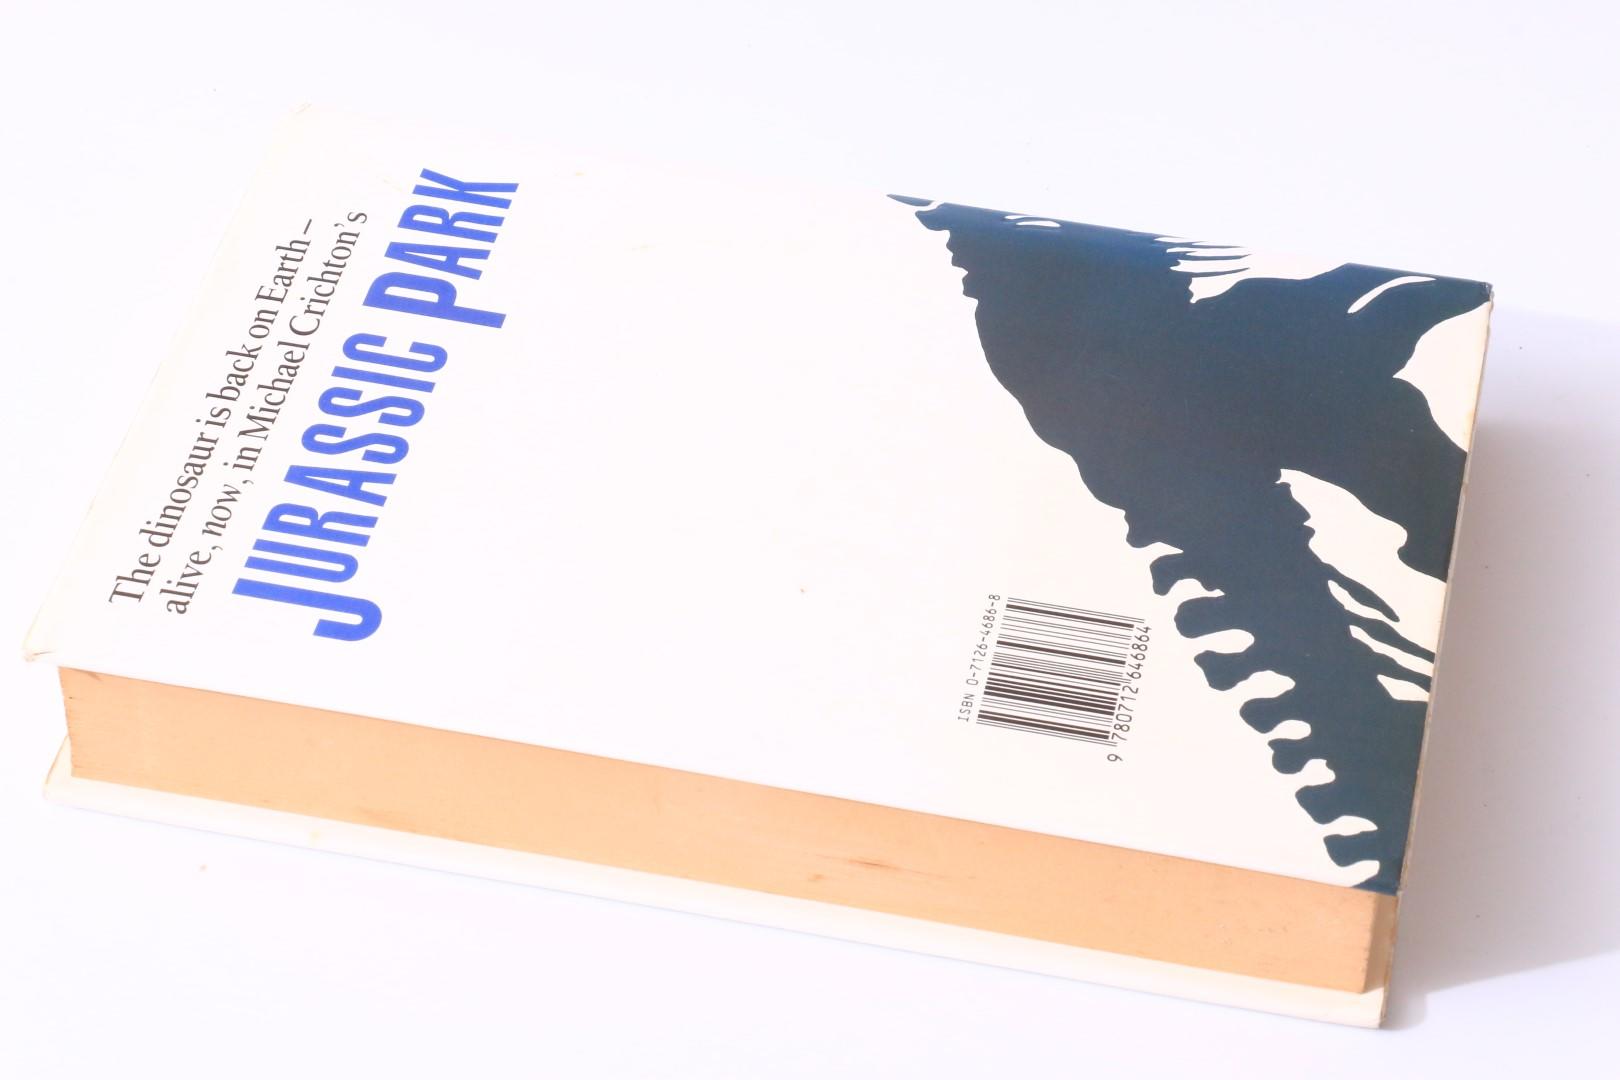 Michael Crichton - Jurassic Park - Century, 1991, First Edition.